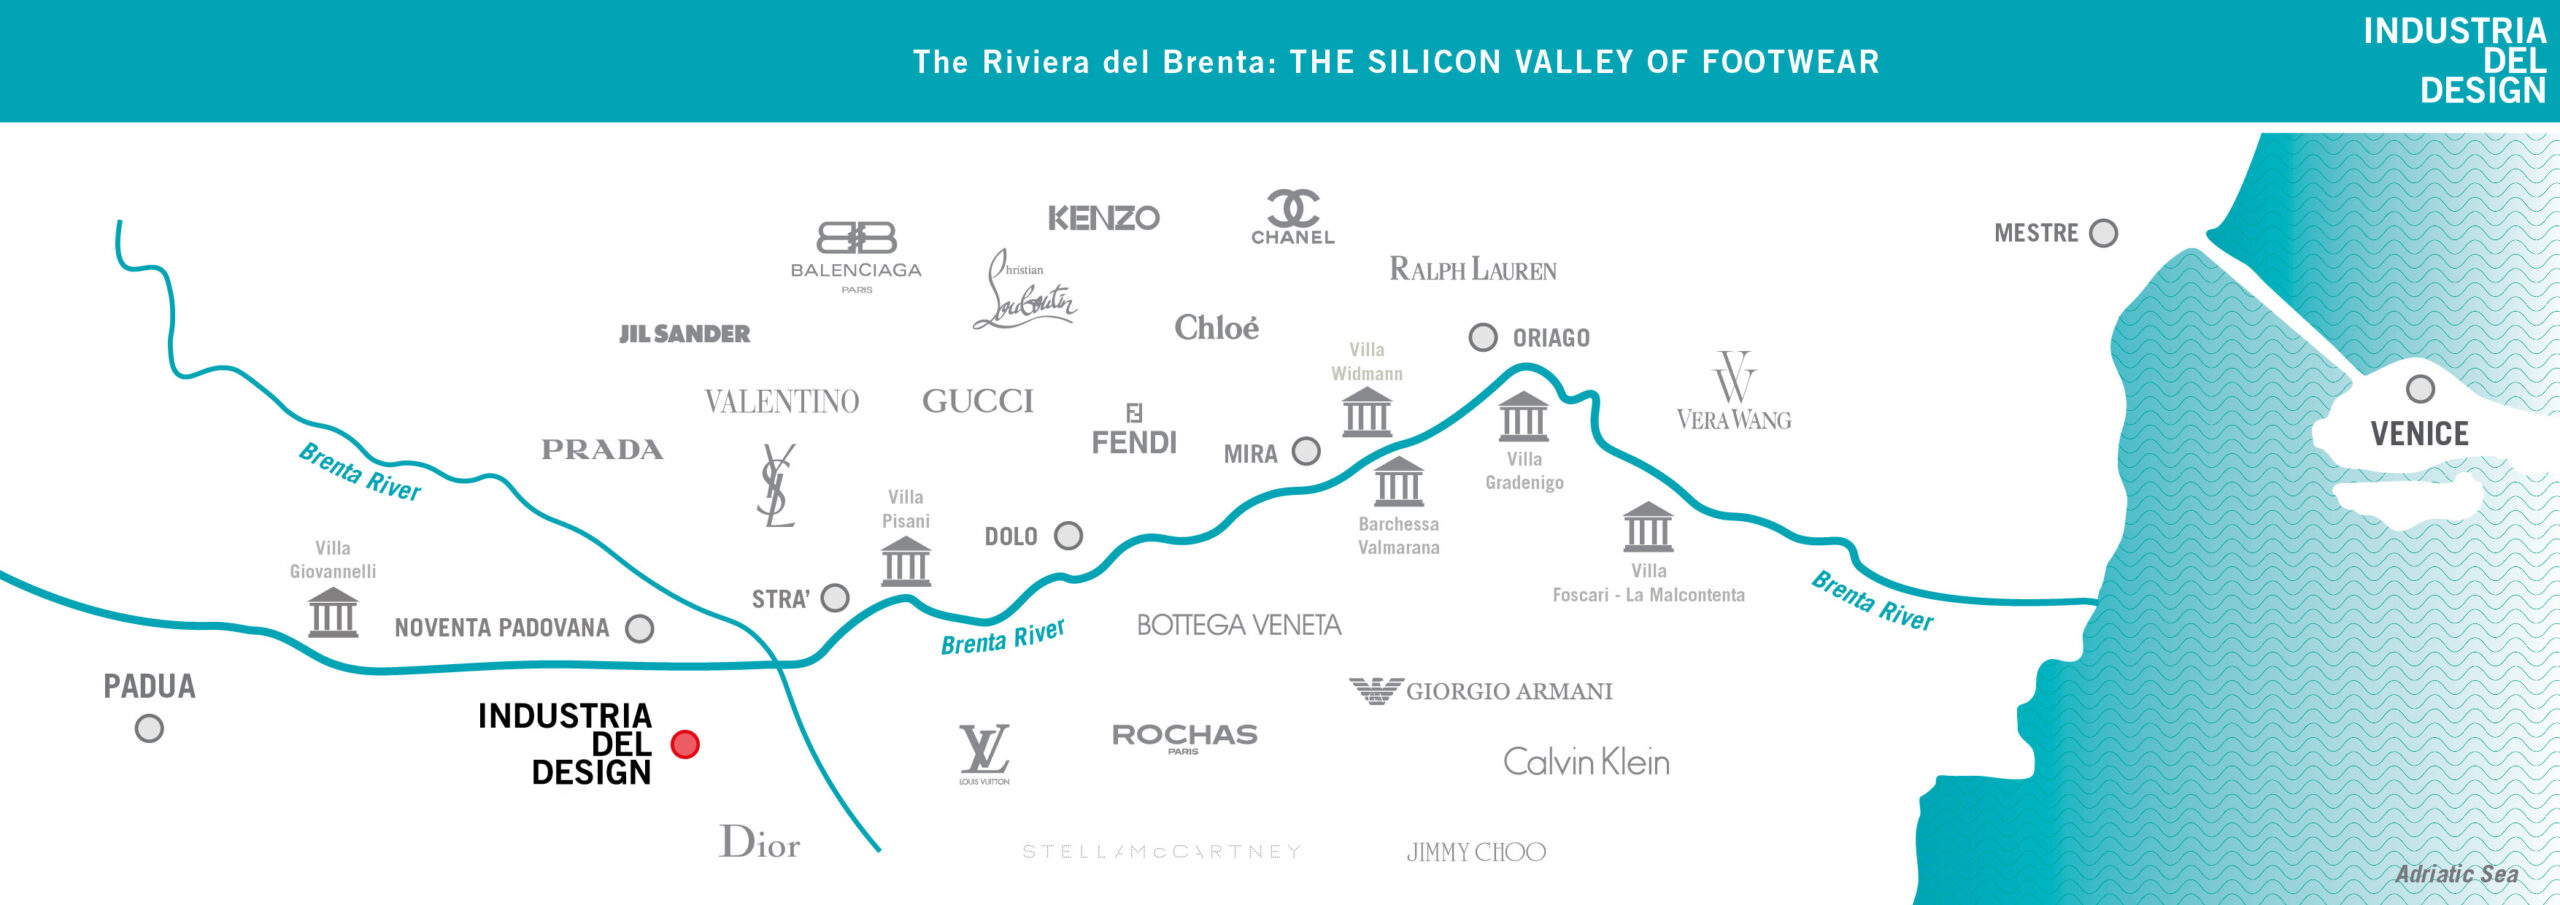 IDD-The-Riviera-del-Brenta-The -Silicon-Valley-of-Footwear